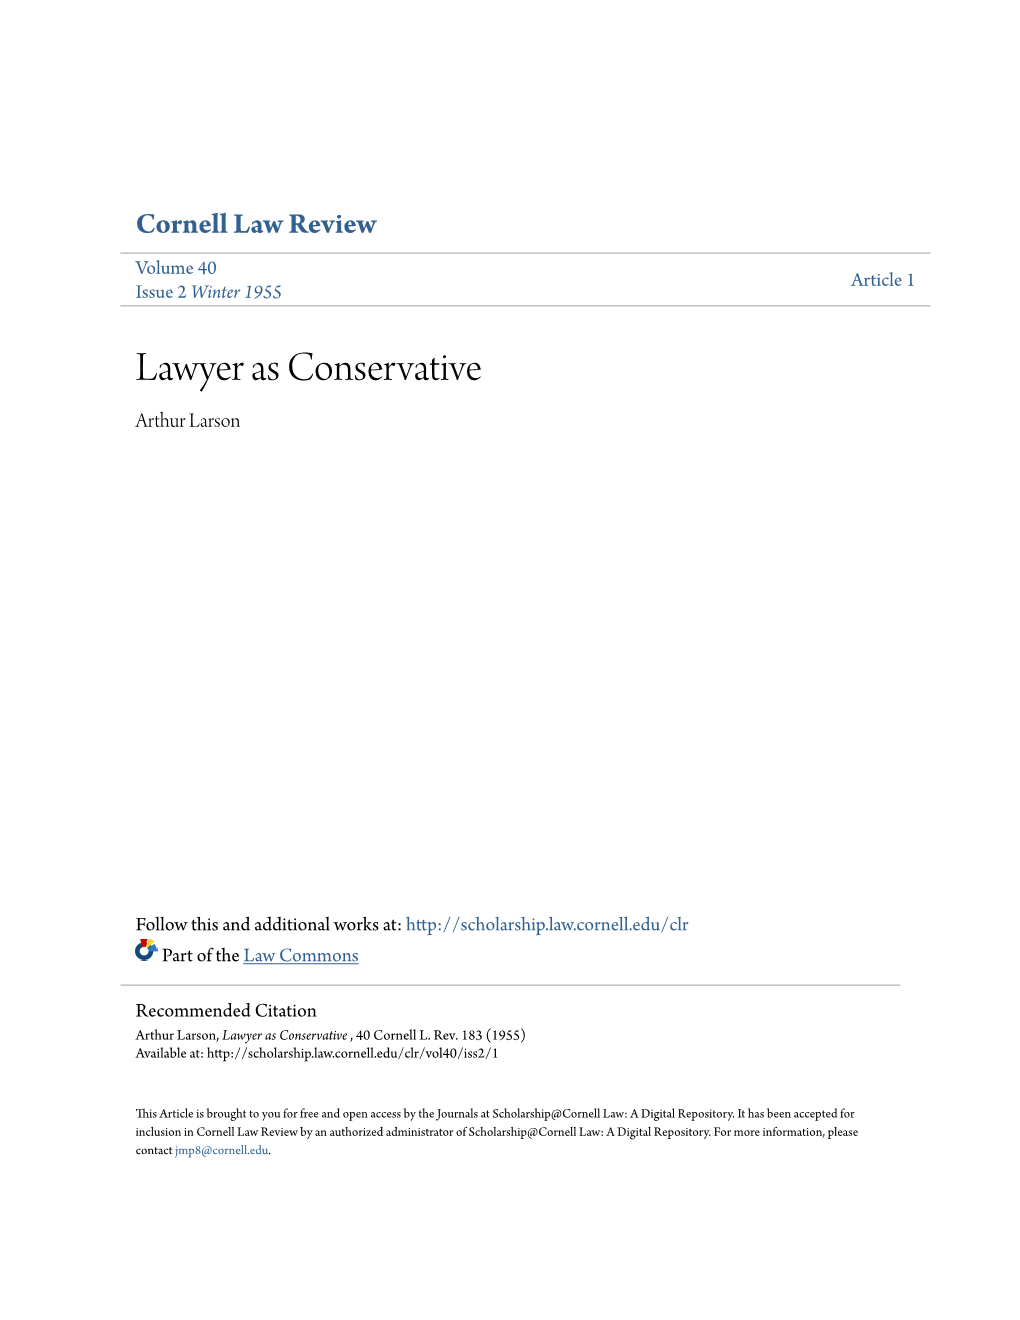 Lawyer As Conservative Arthur Larson